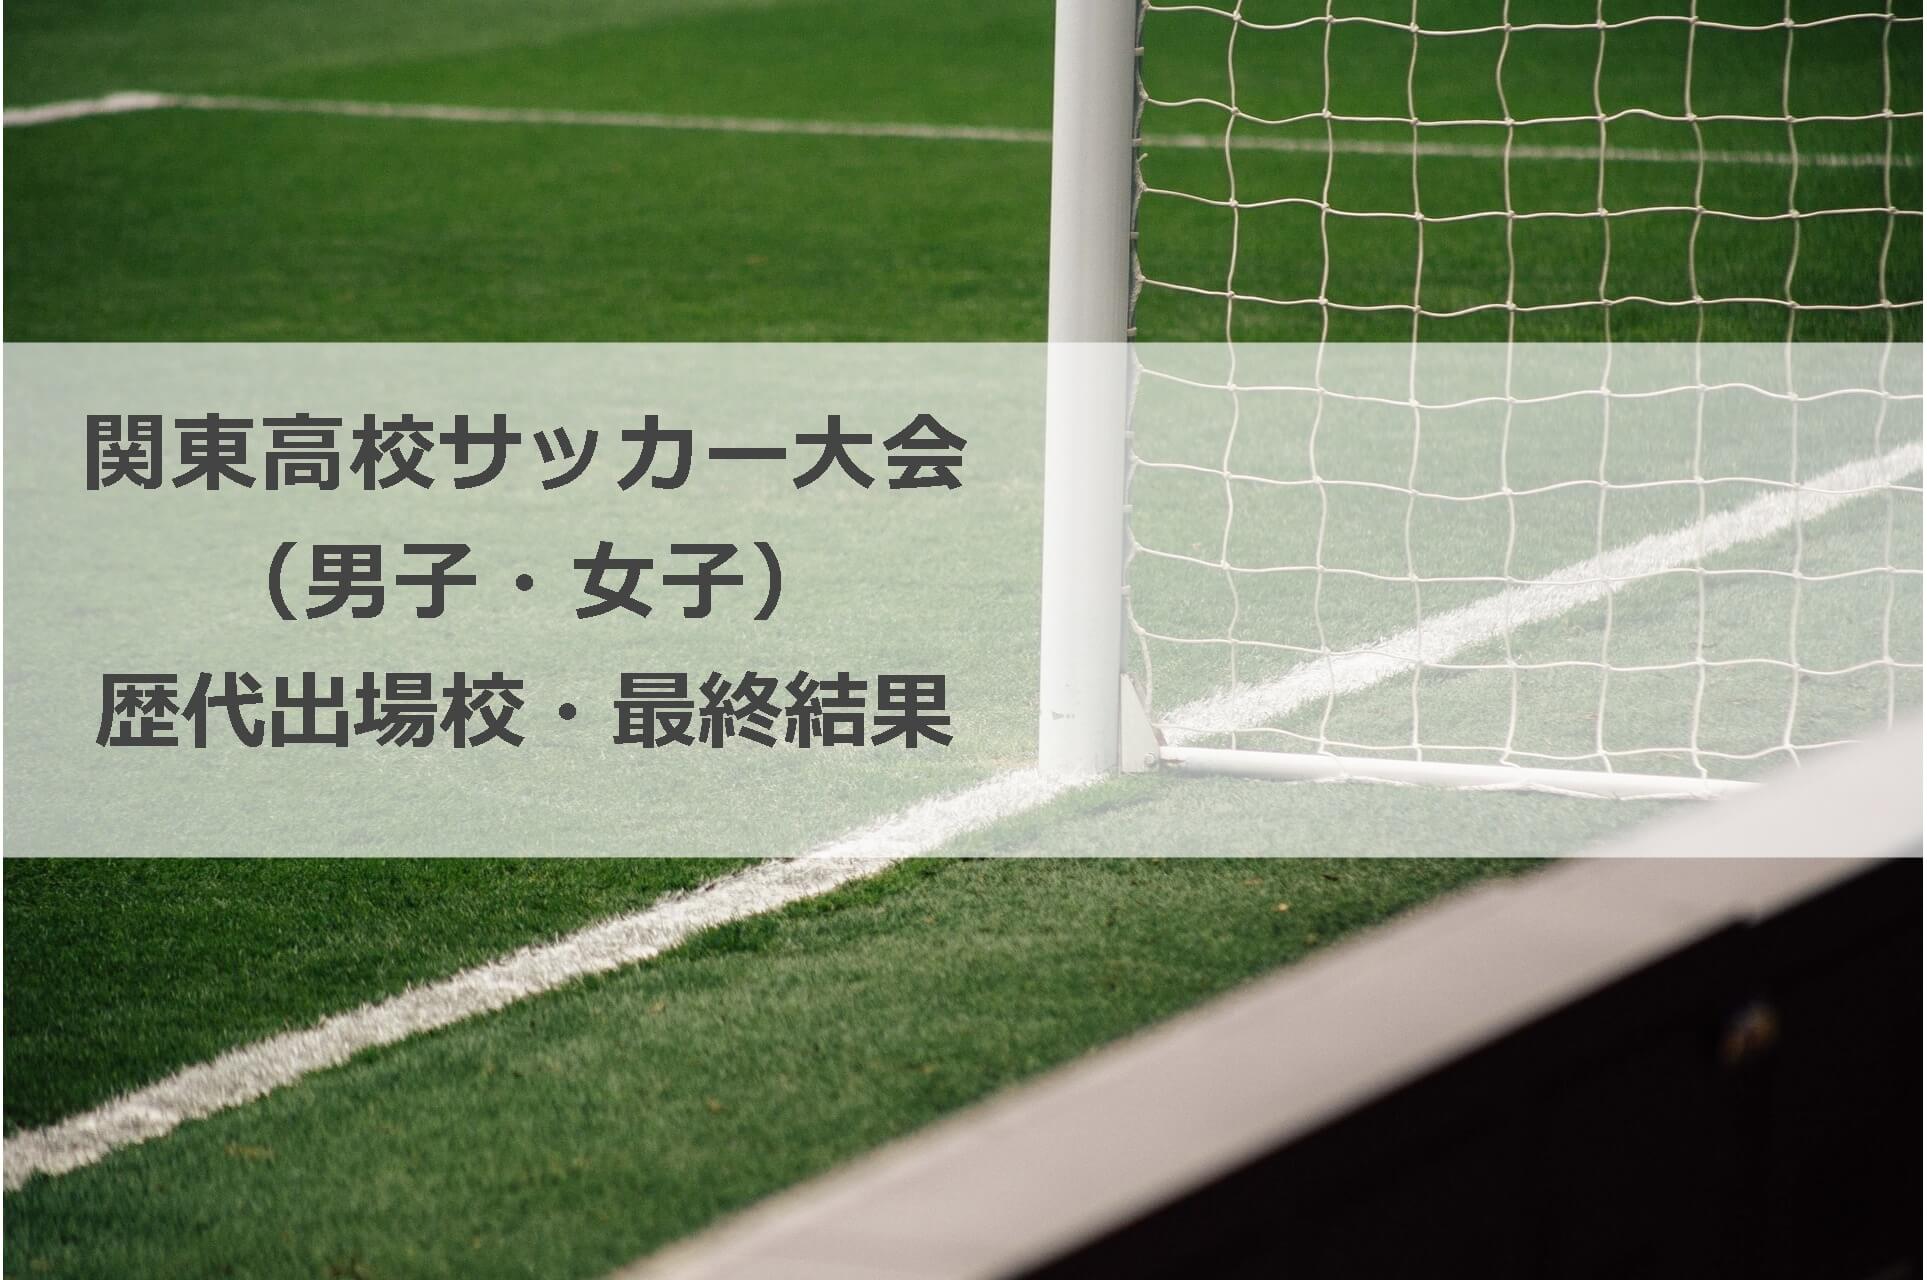 関東大会 高校サッカー 男子 女子 歴代出場校 結果 22年まで更新中